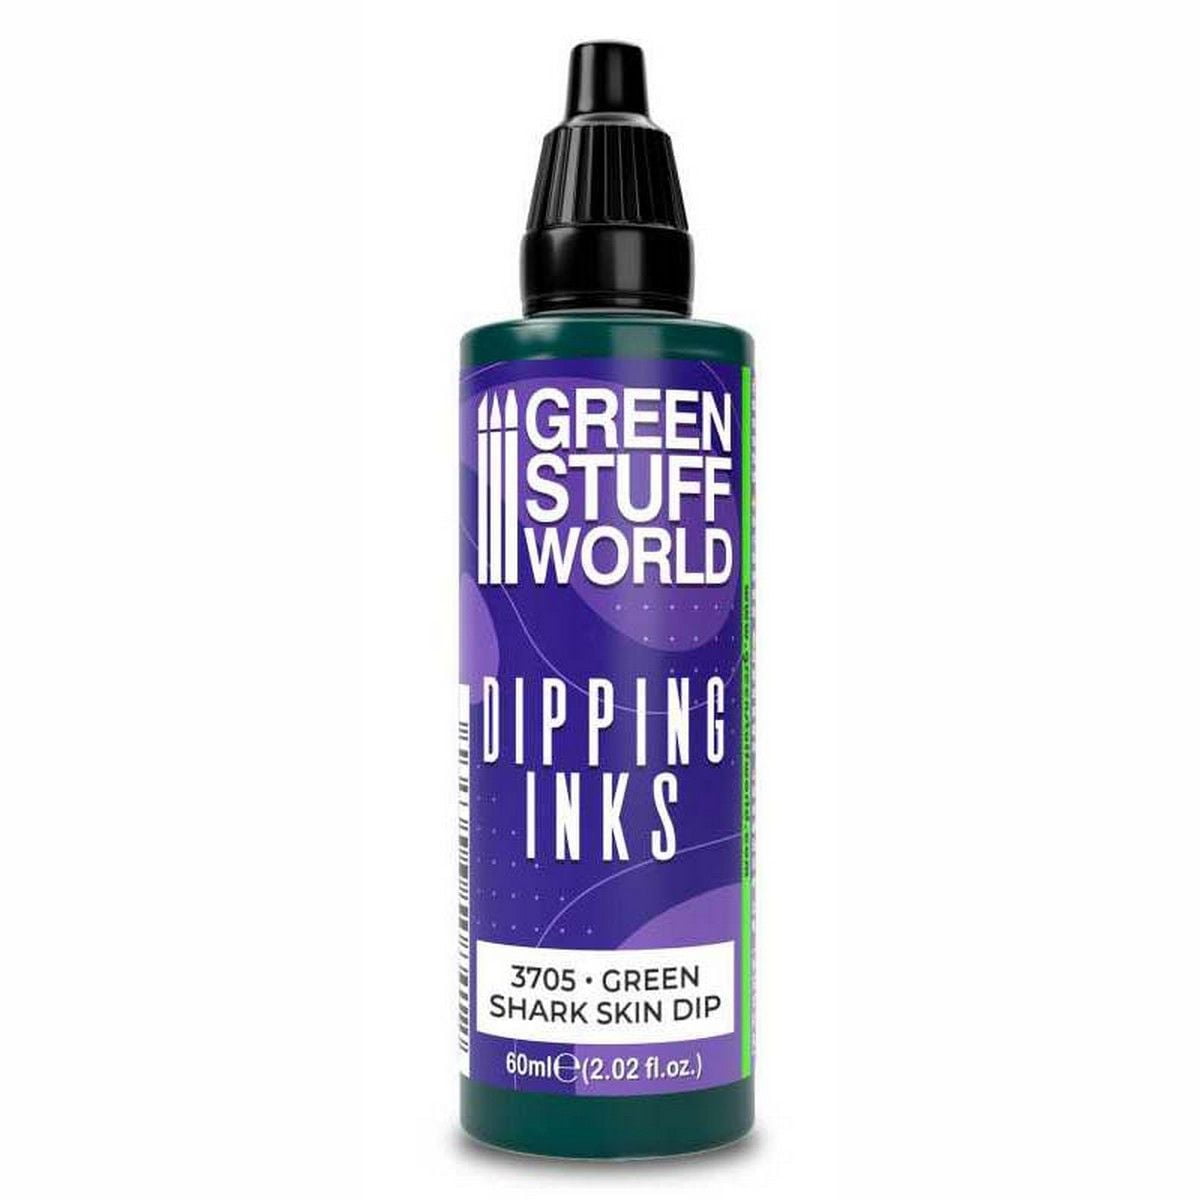 Dipping Ink 60ml - Green Shark Skin Dip